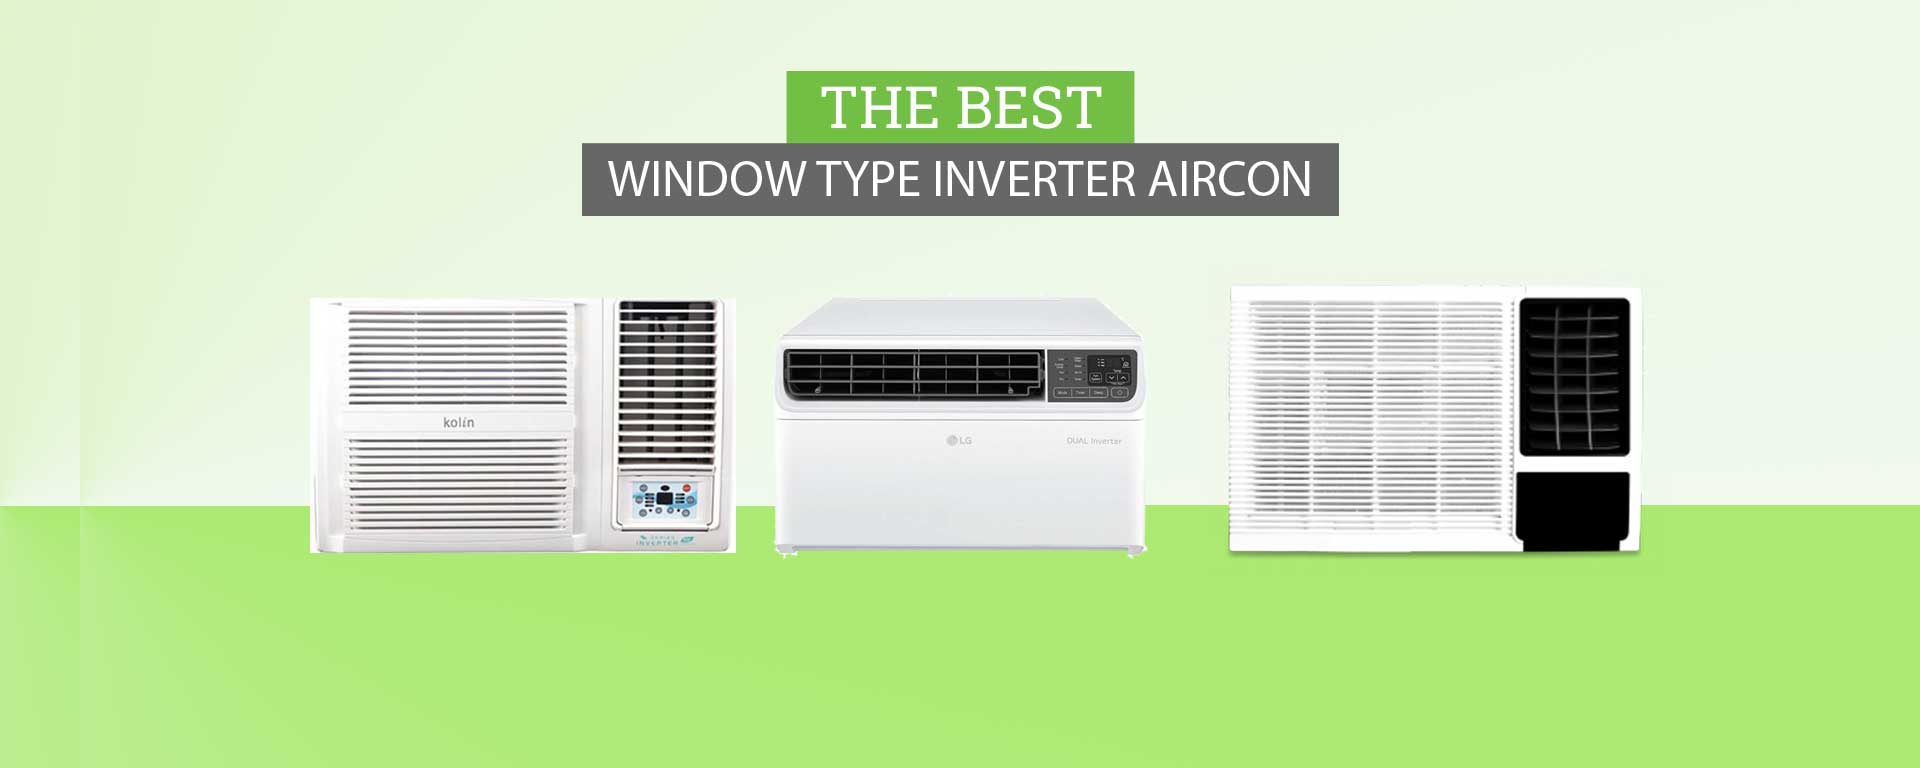 window type aircon inverter